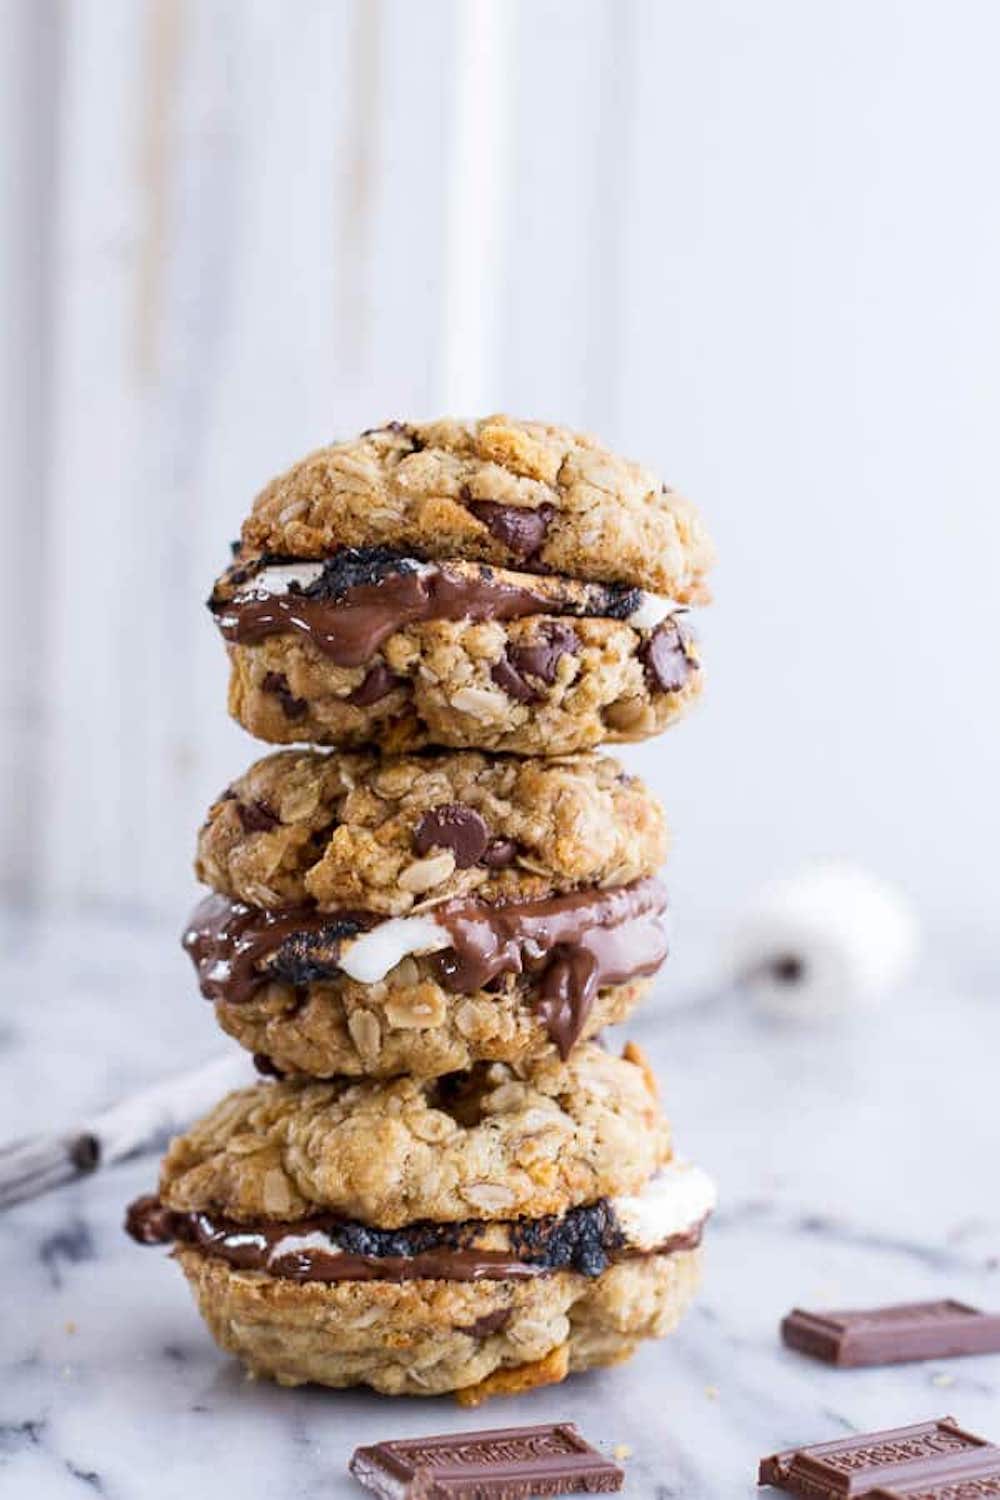 Oatmeal-Chocolate-Chip-+-Graham-Cracker-Cookie-SmoresSmores-Chocolate-Mousse-Bars-AMAZING-SMORES-Crunchy-chocolate-ganache-marshmallows-smores-recipe